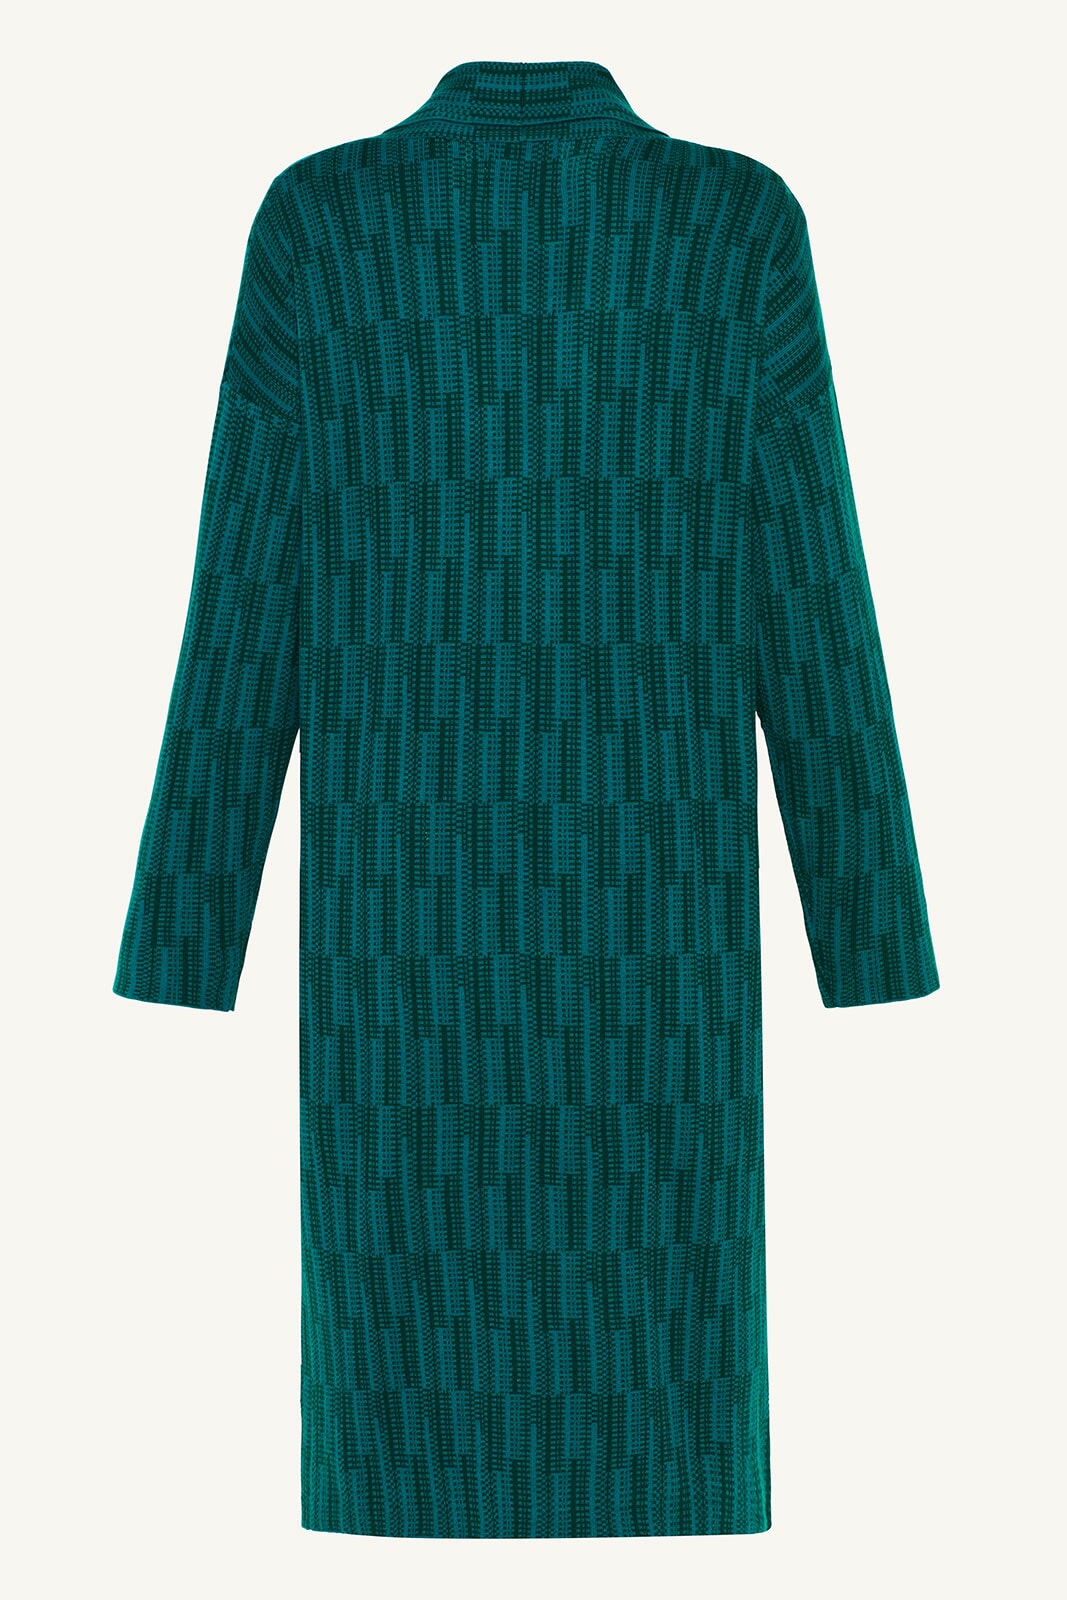 Jacquard Merino Wool Knit Cardigan - Deep Teal Clothing saigonodysseyhotel 